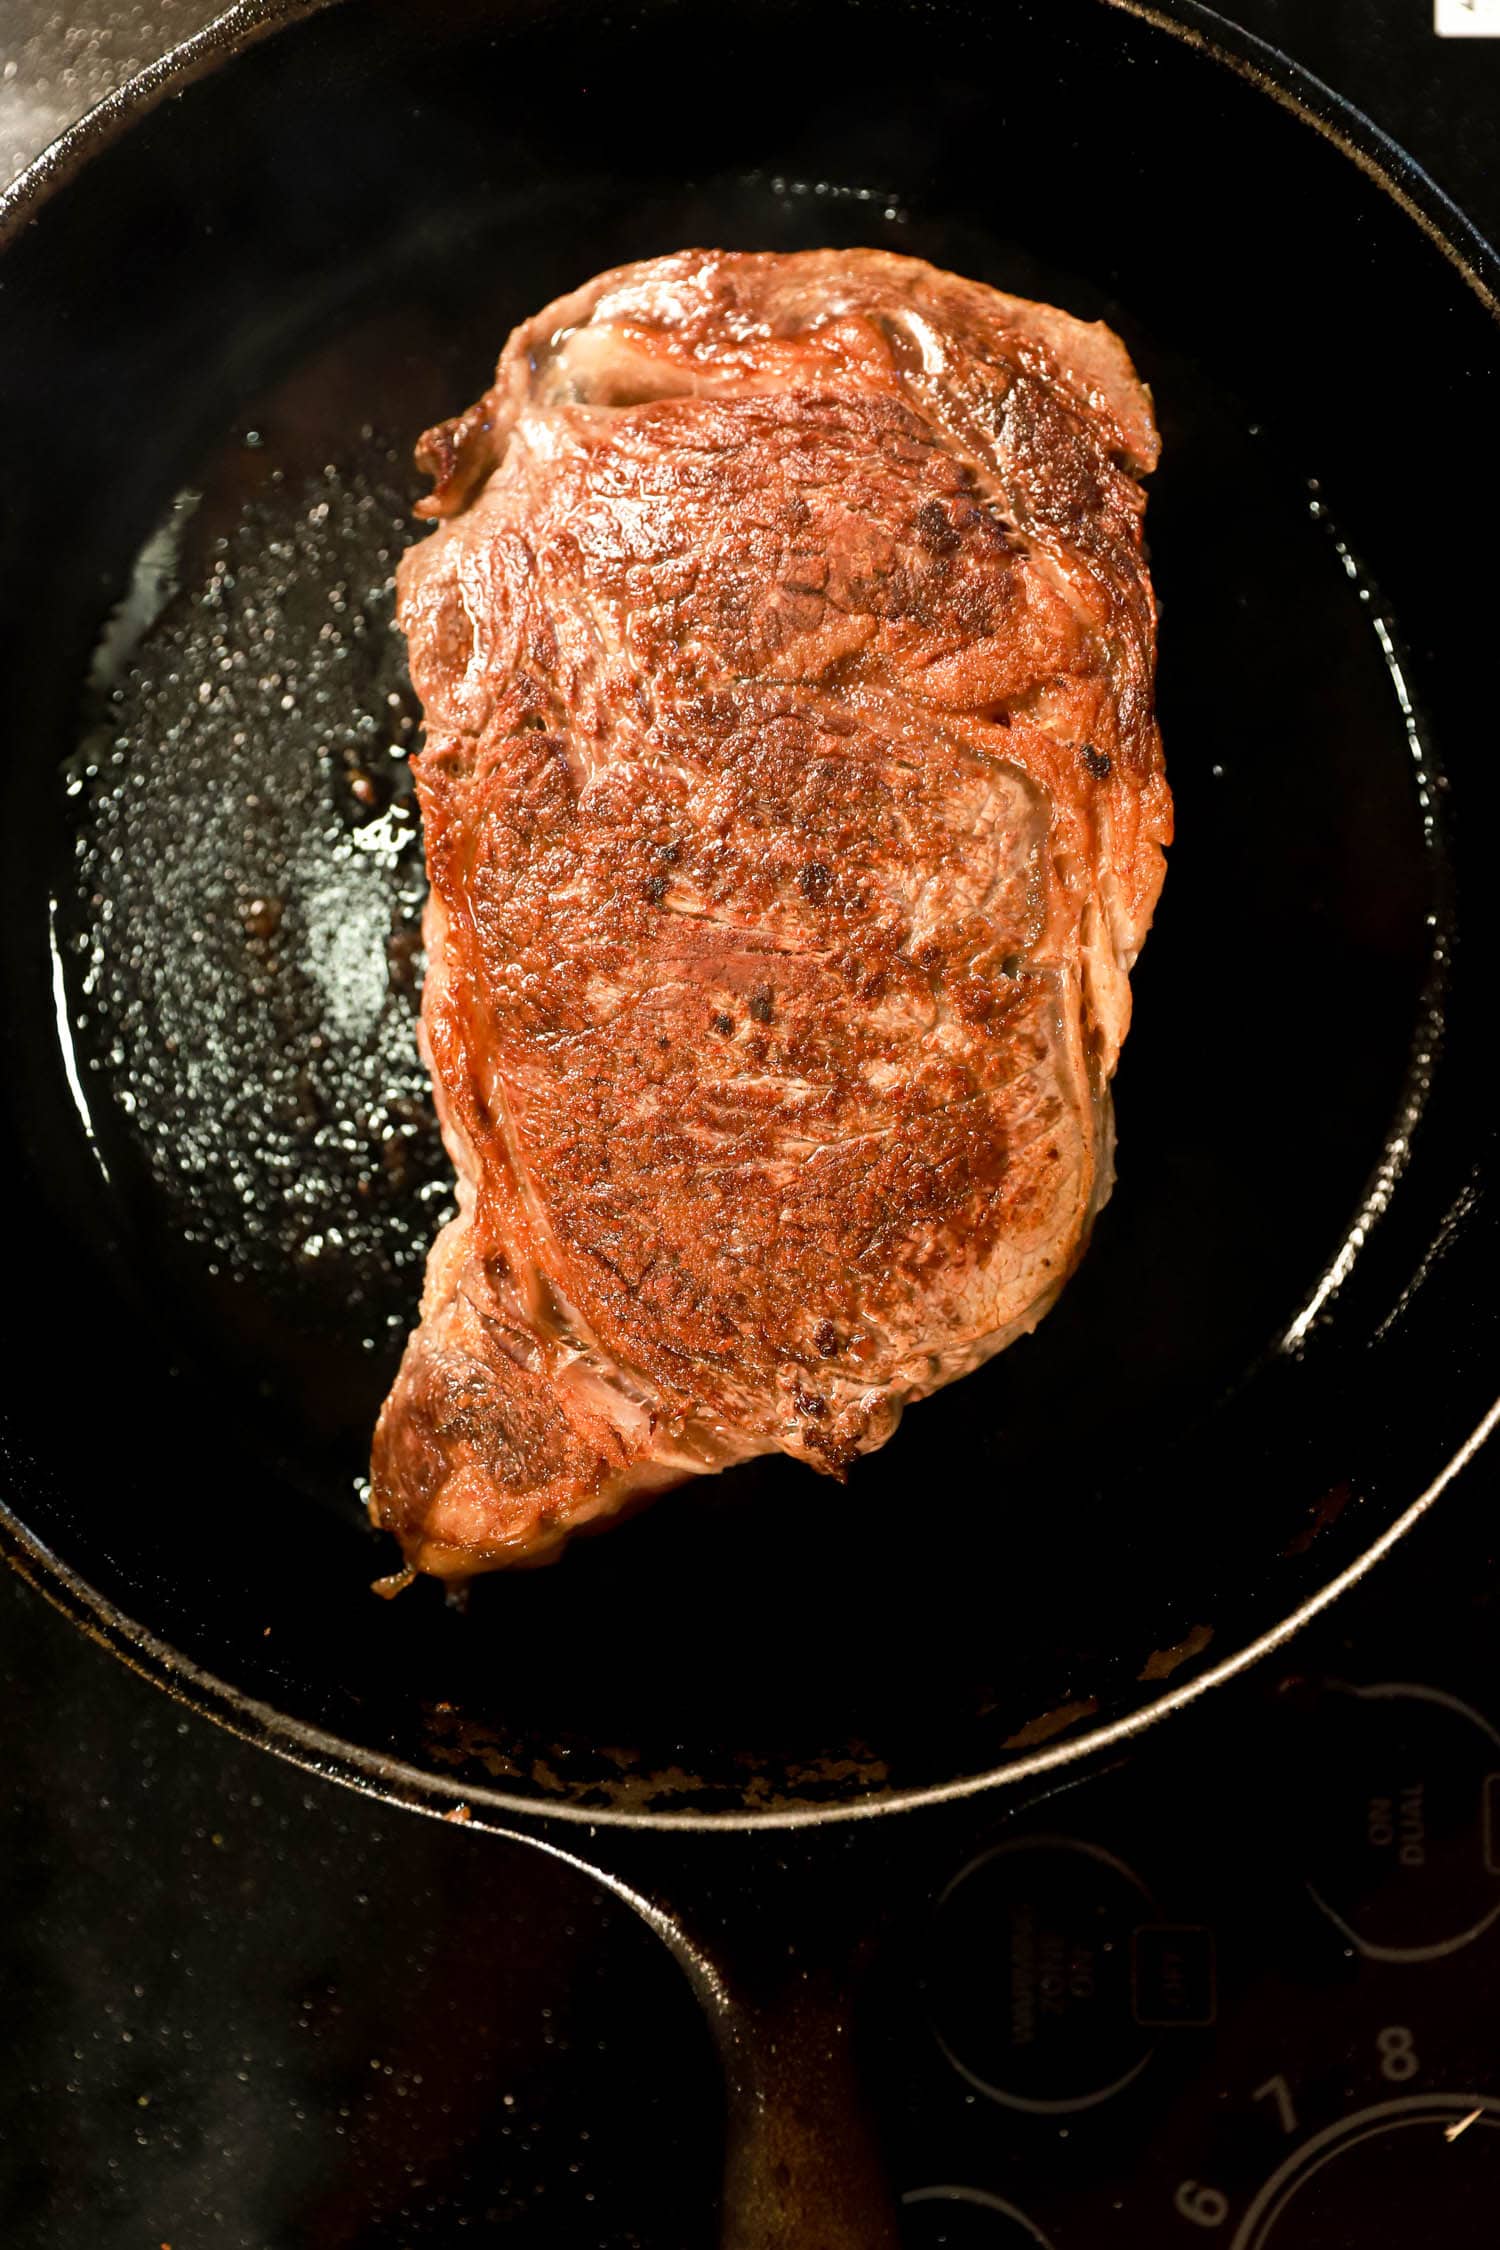 Seared ribeye steak in a cast iron skillet pan.